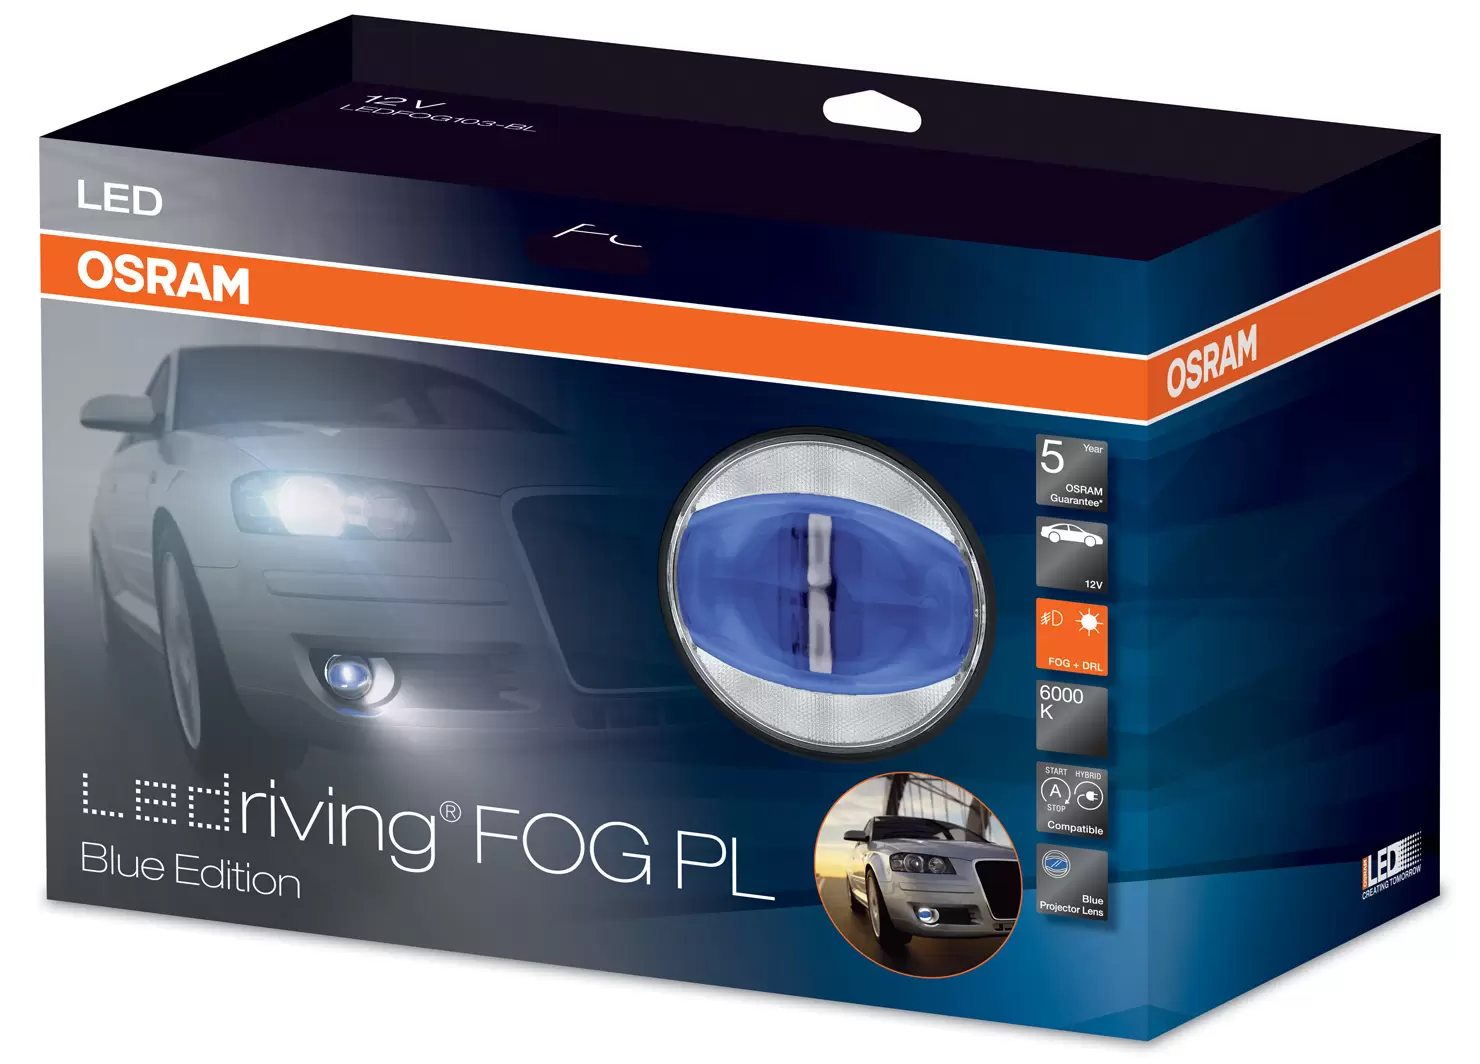 OSRAM LEDriving FOG PL Kit Information & Review